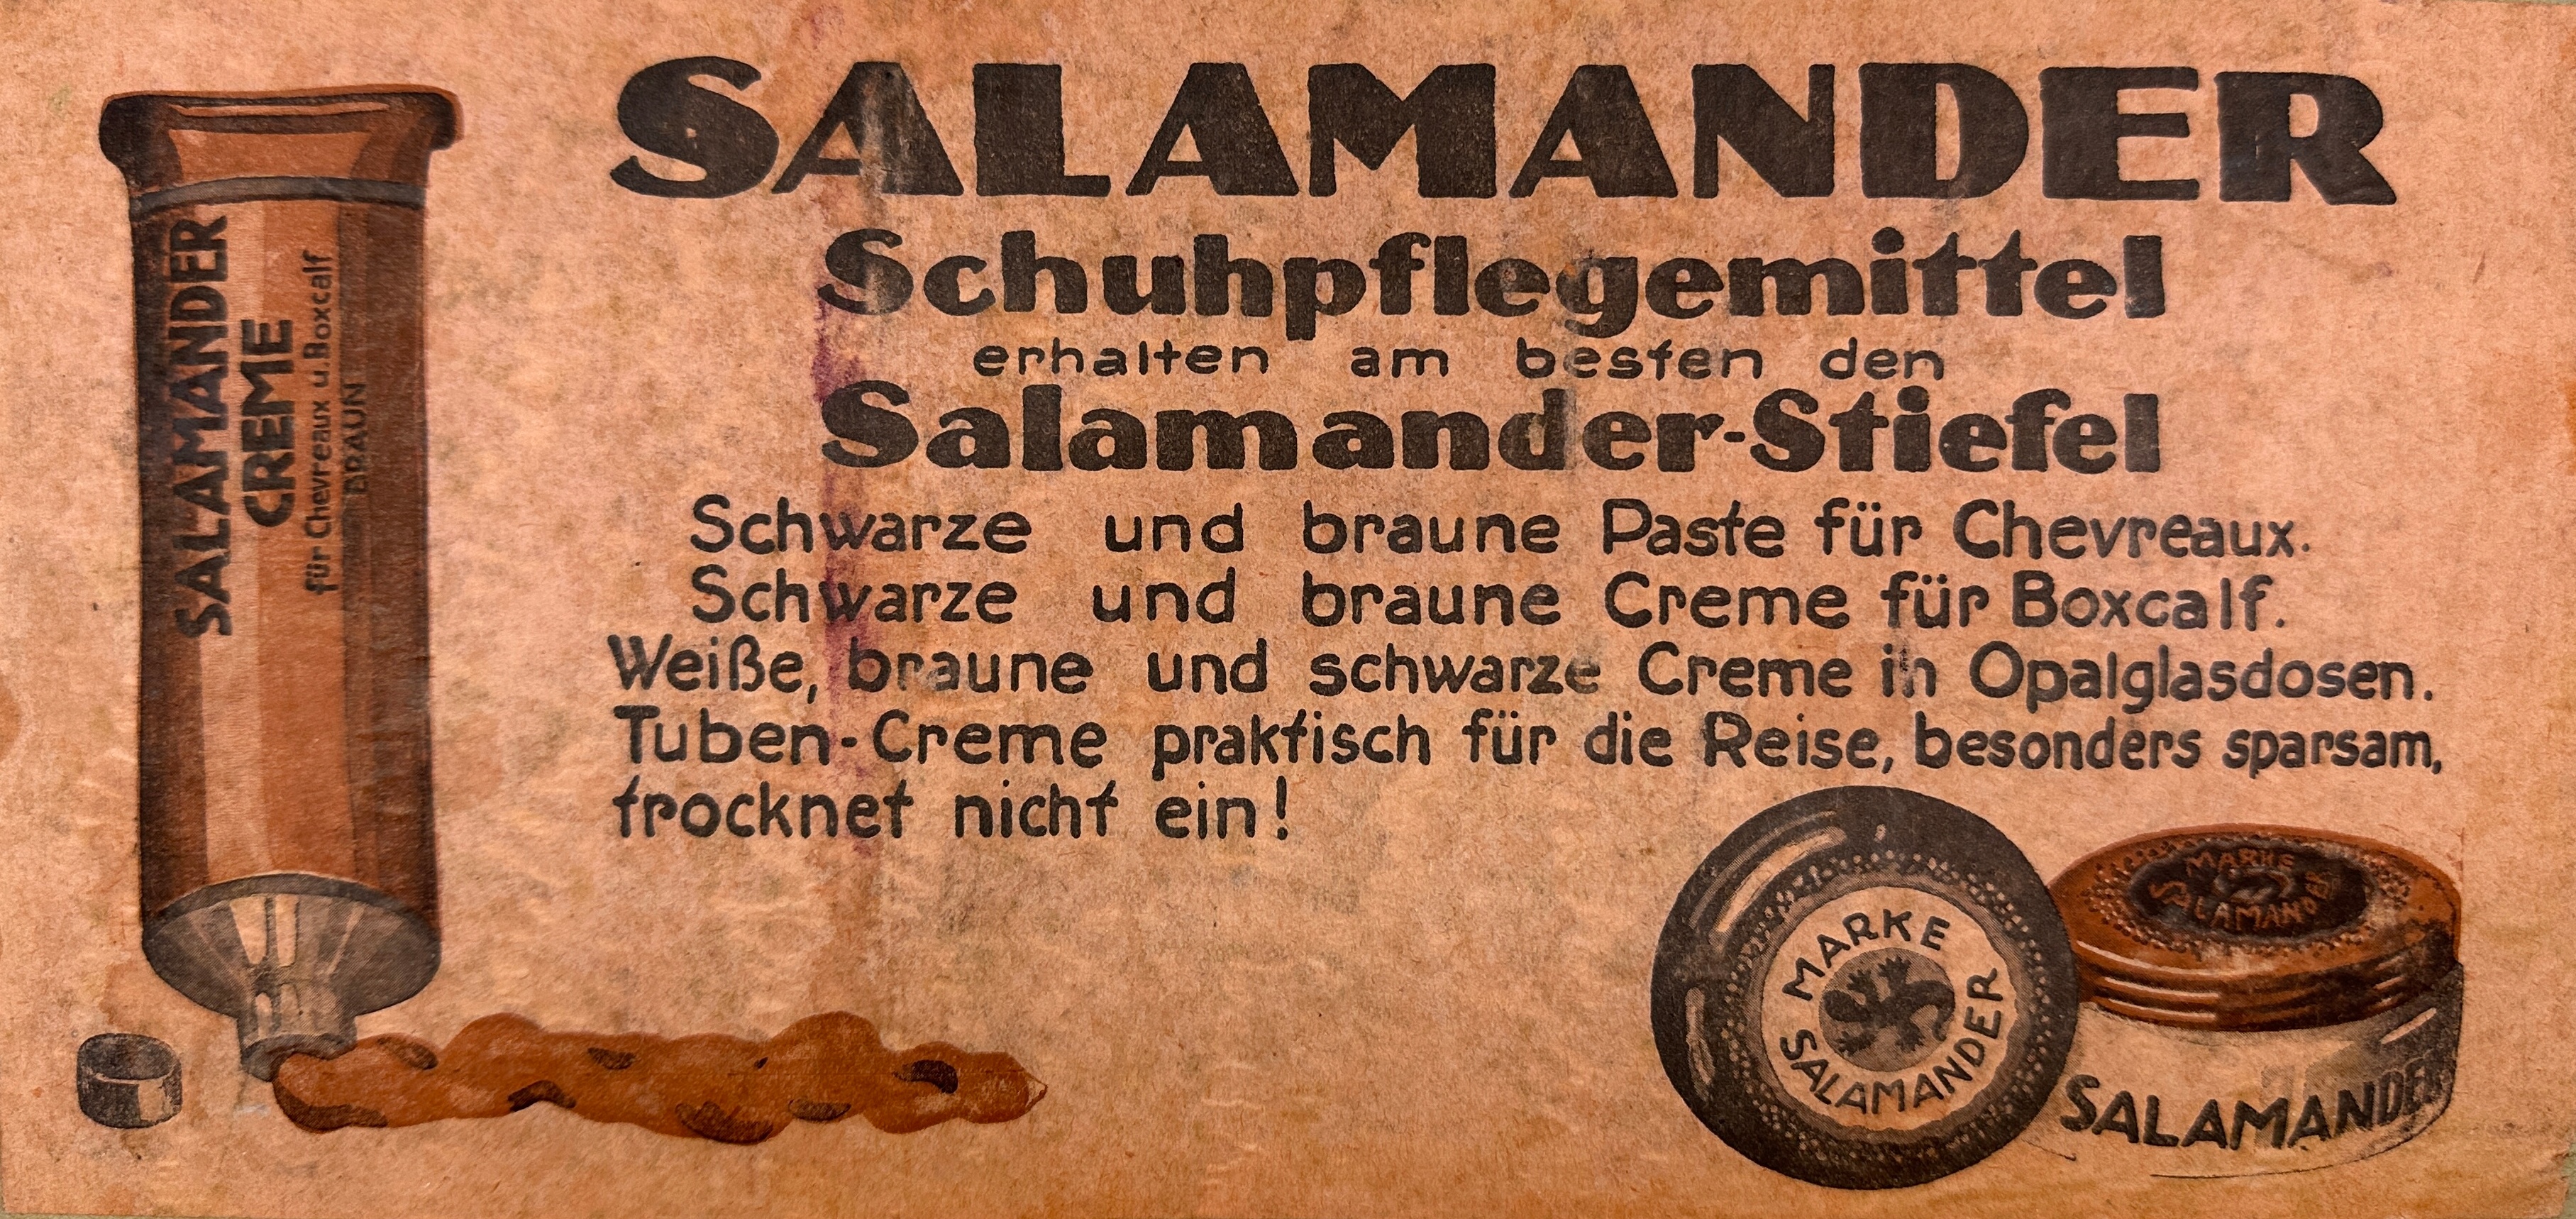 Salamander Werbung